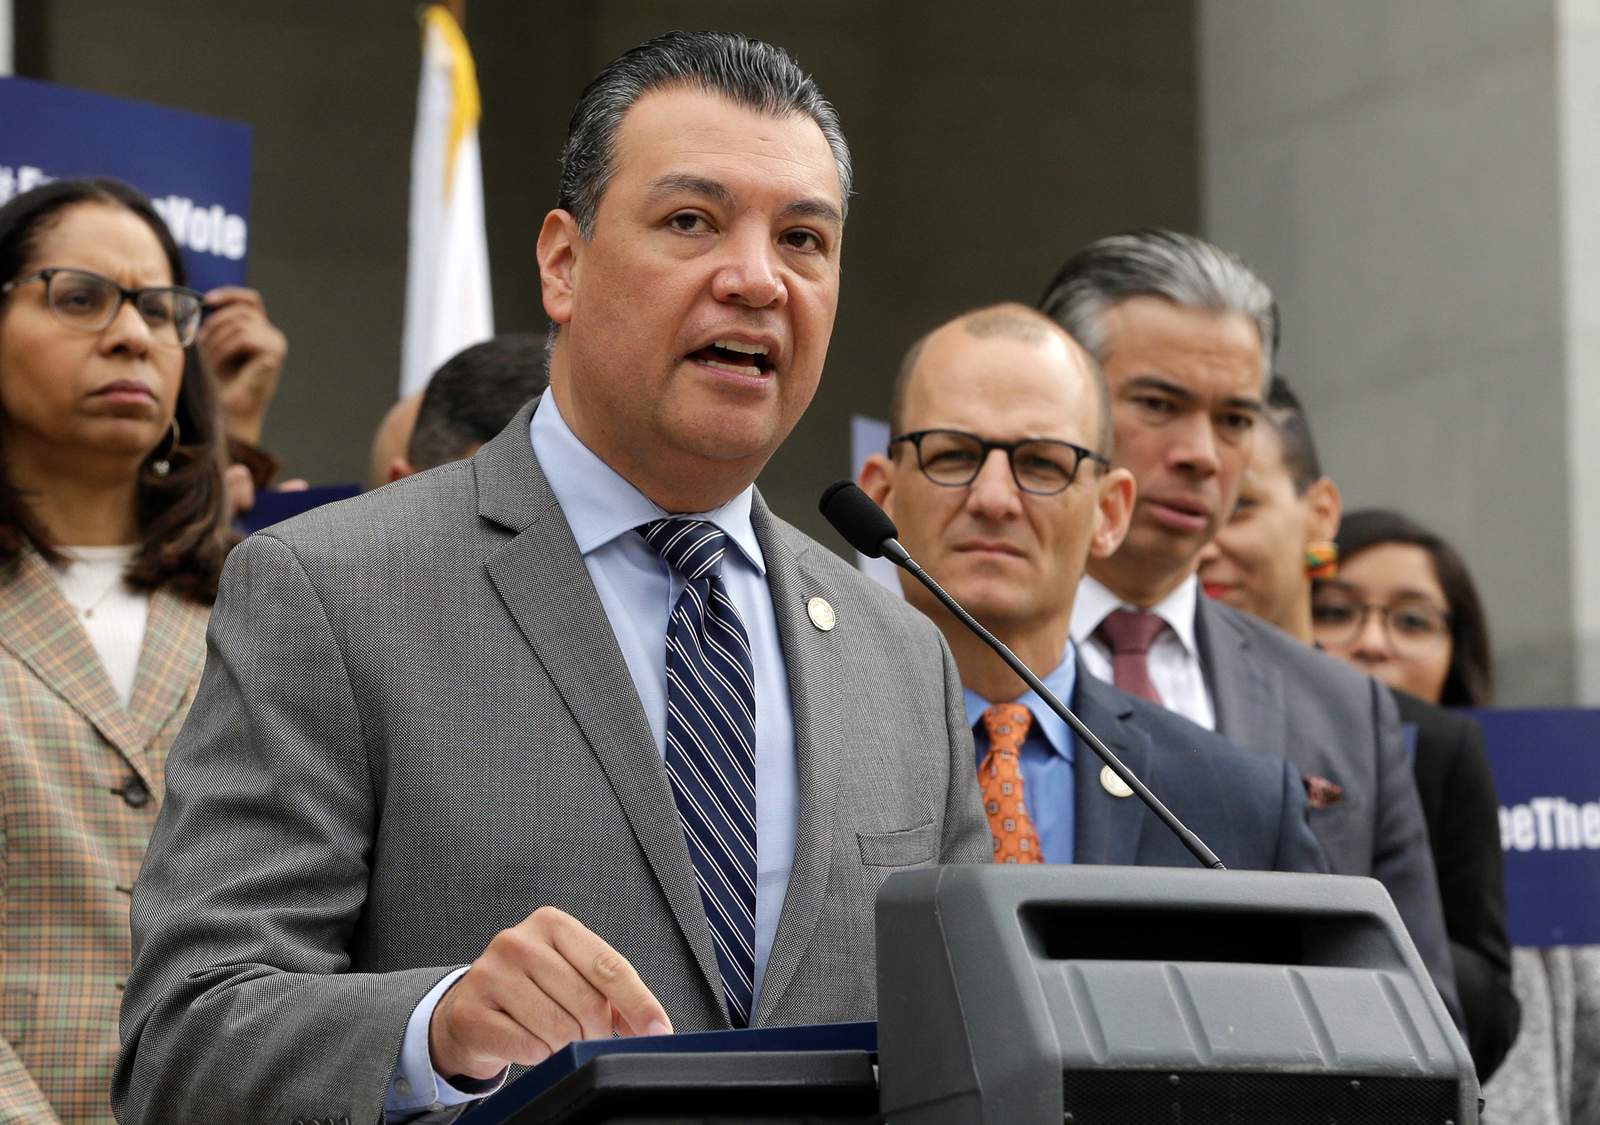 California gets Latino US senator, some Black leaders angry